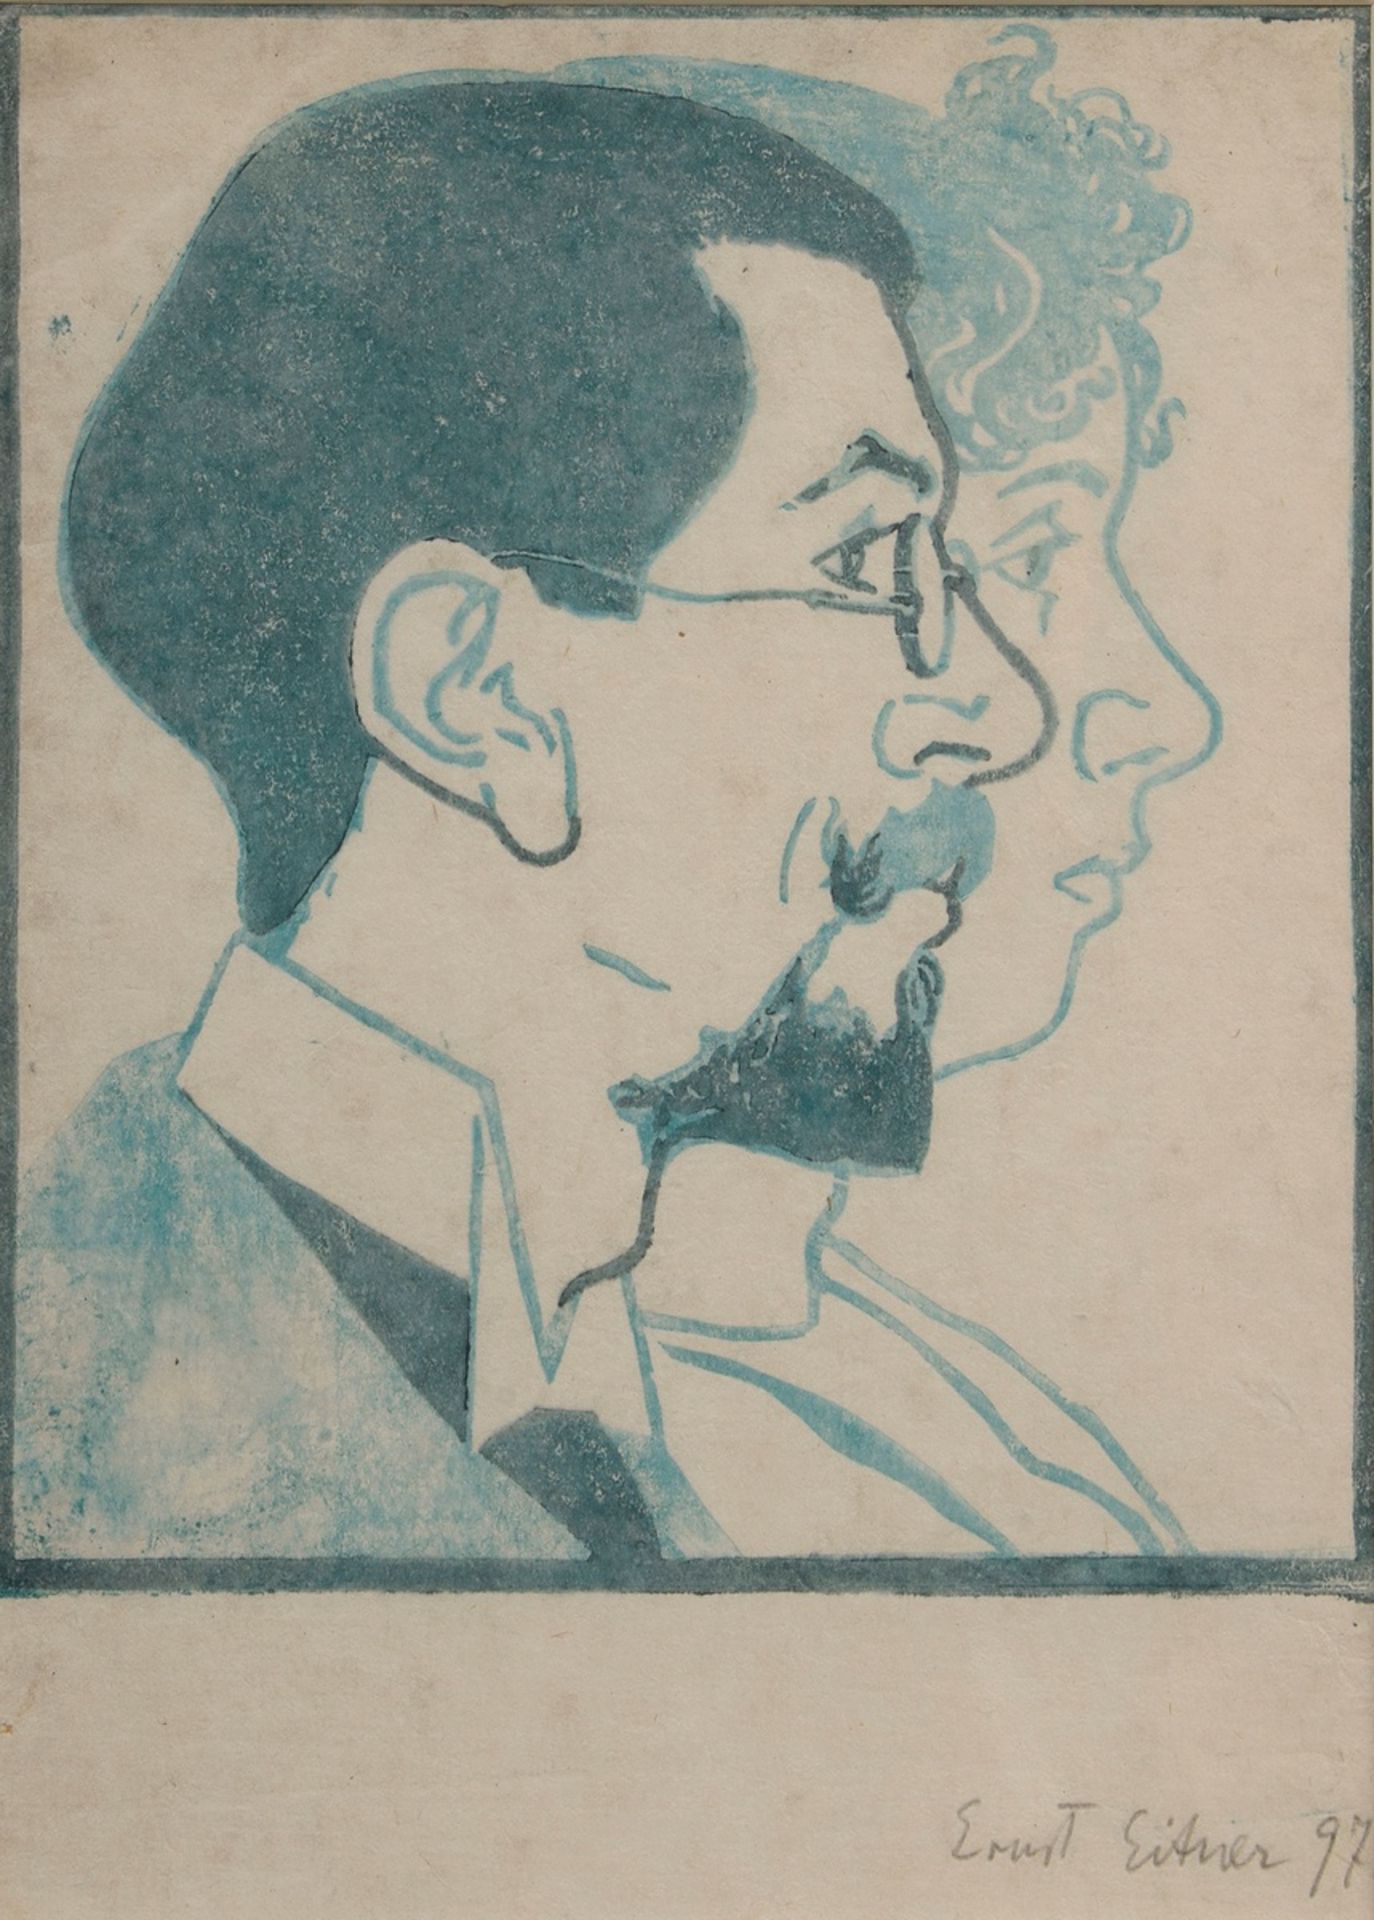 Eitner, Ernst (1867-1955) "Double portrait Ernst and Toni Eitner" 1897, colour woodcut, l.r. sign./